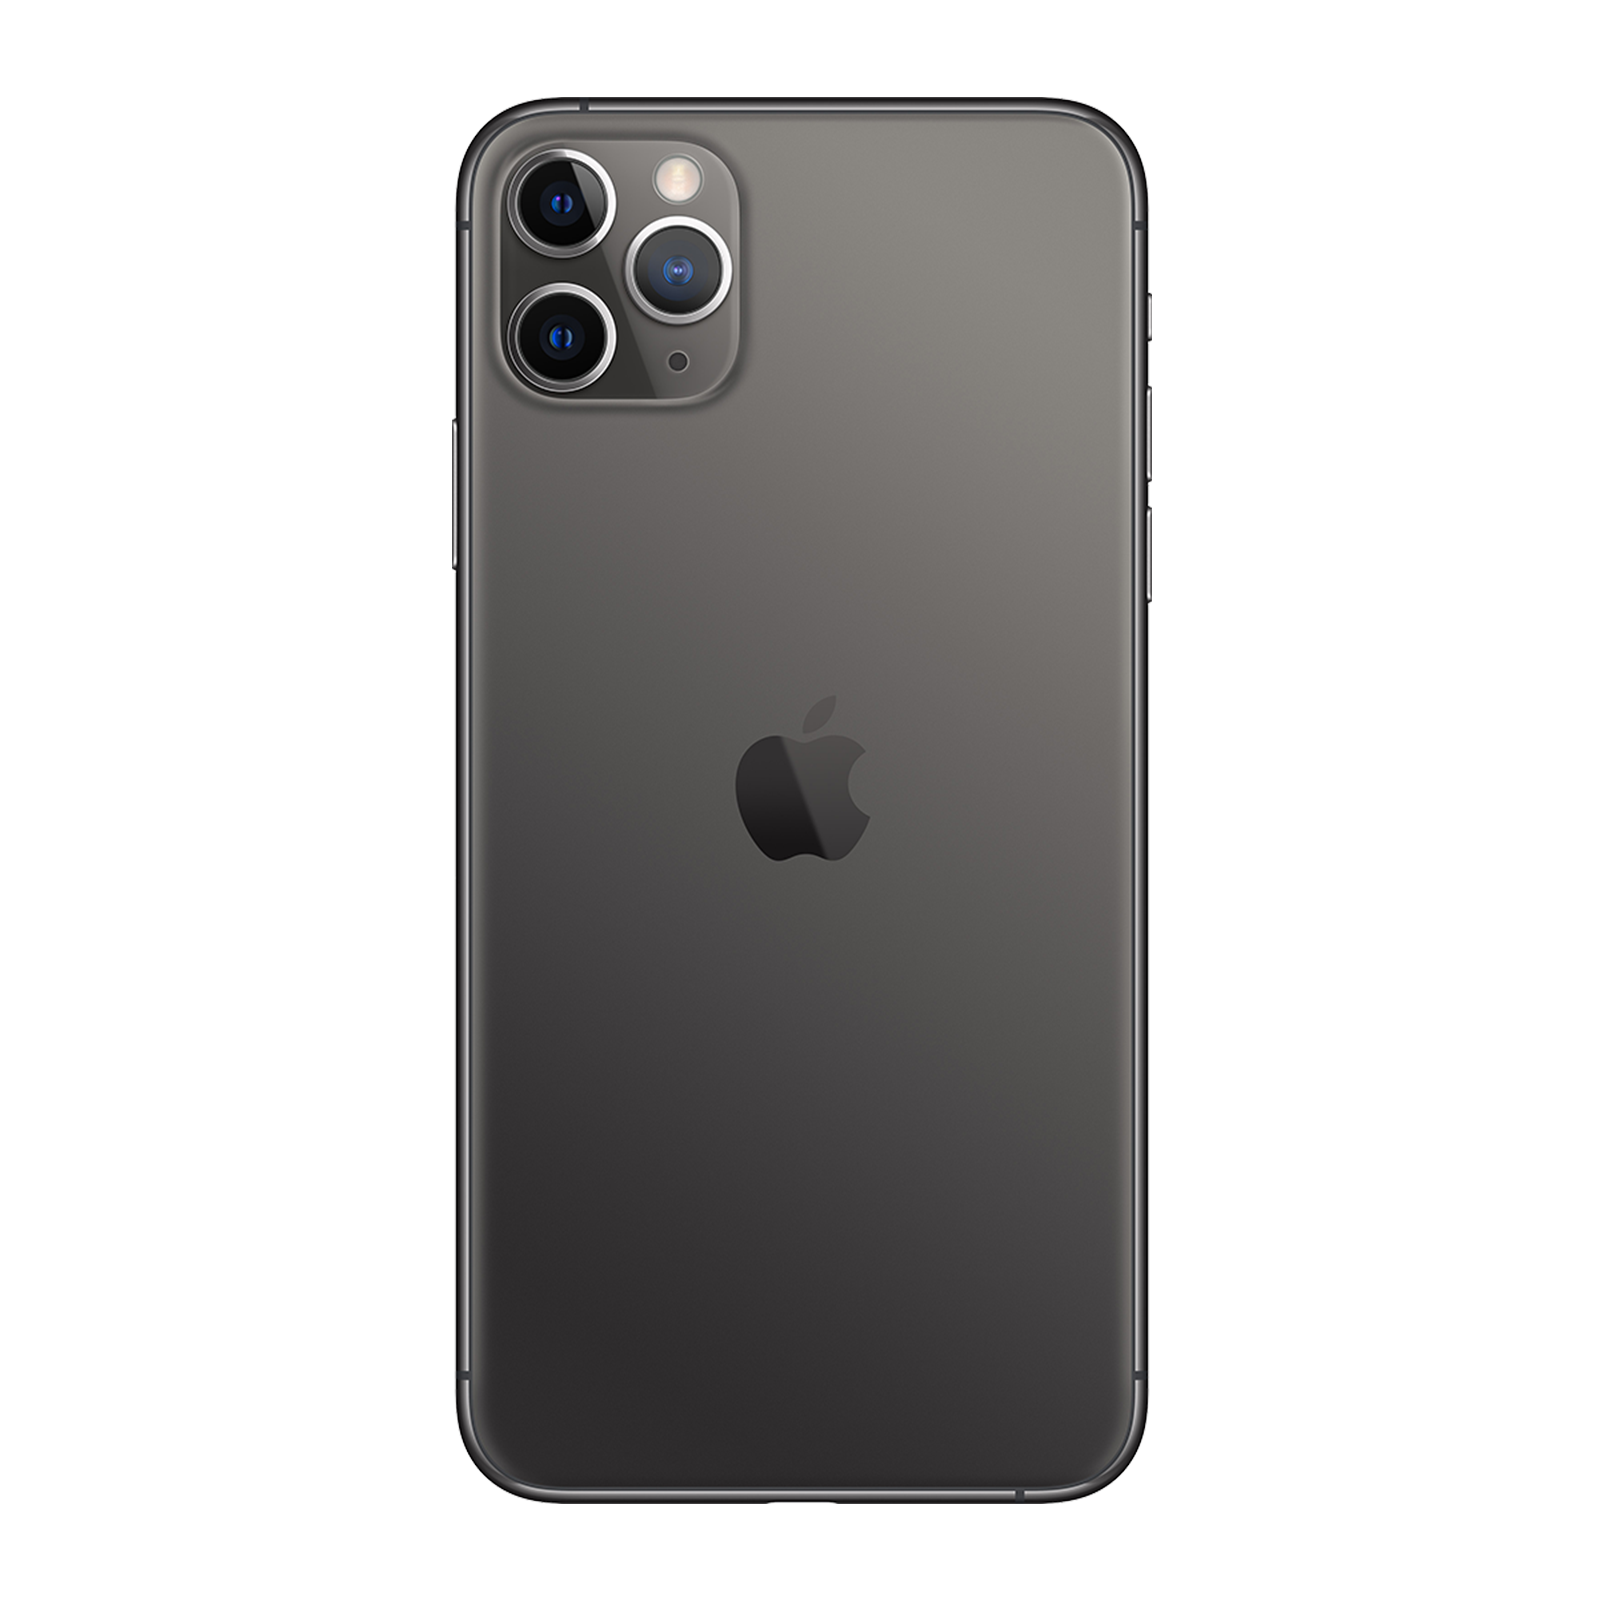 Apple iPhone 11 Pro 256GB Space Grey Fair - Verizon